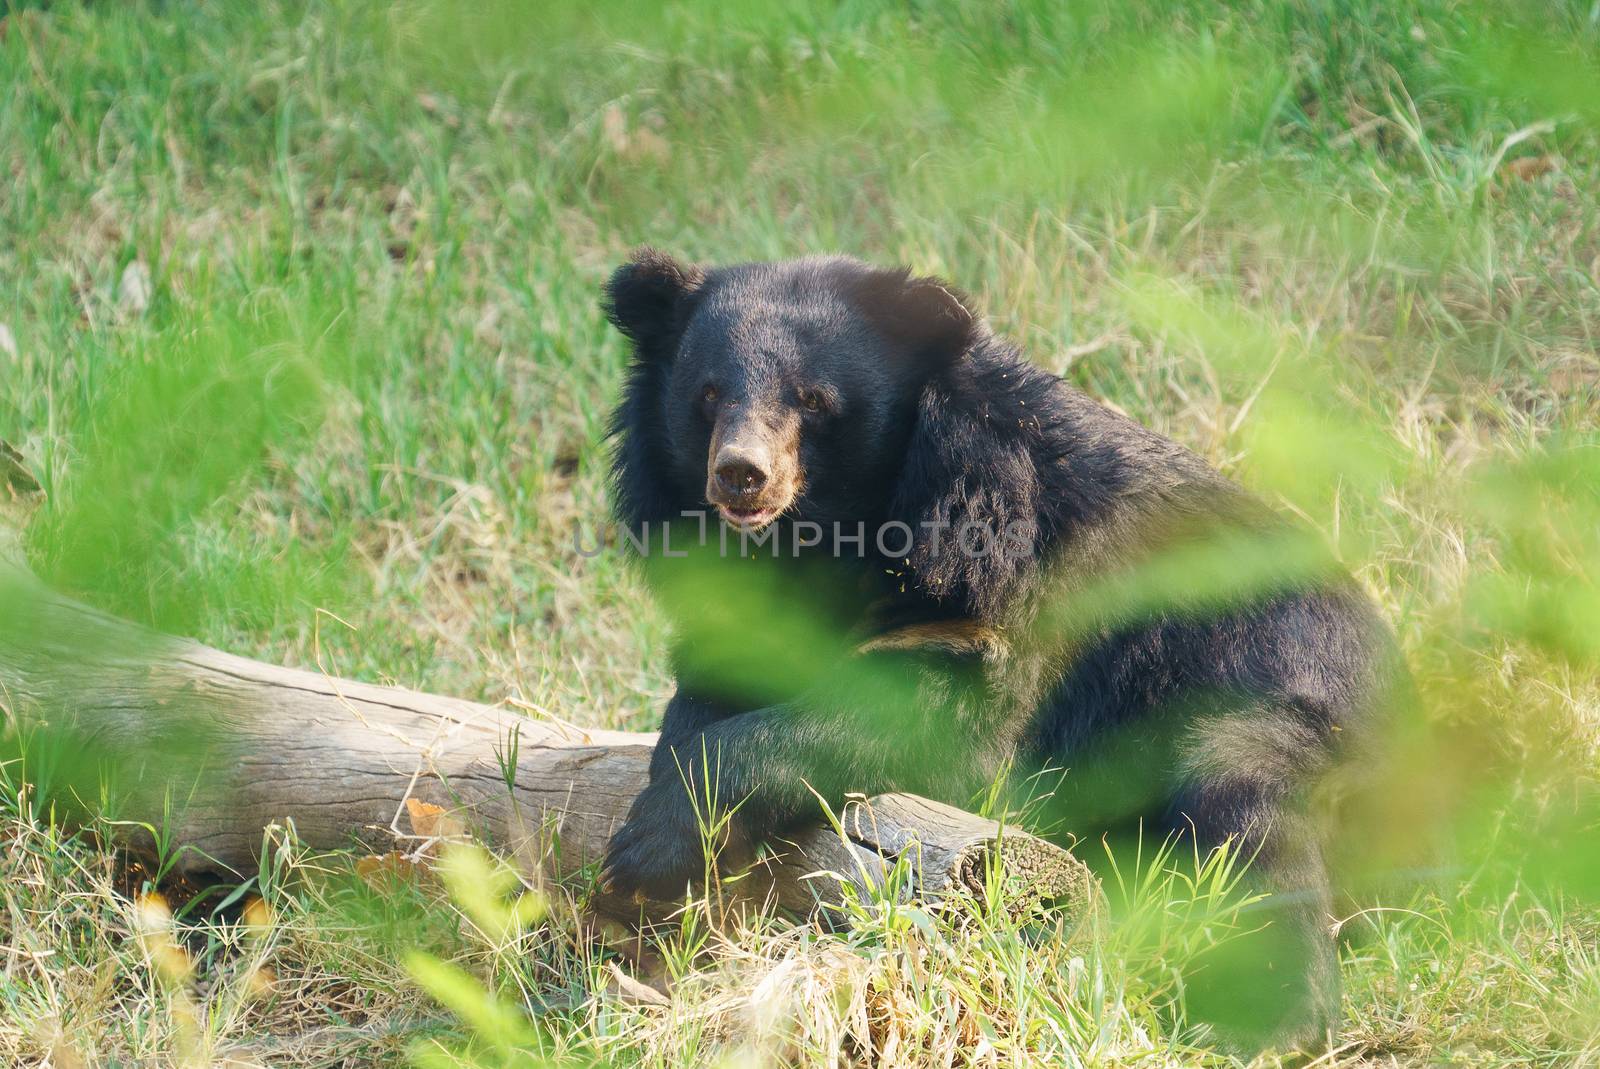 asiatic black bear or moon bear